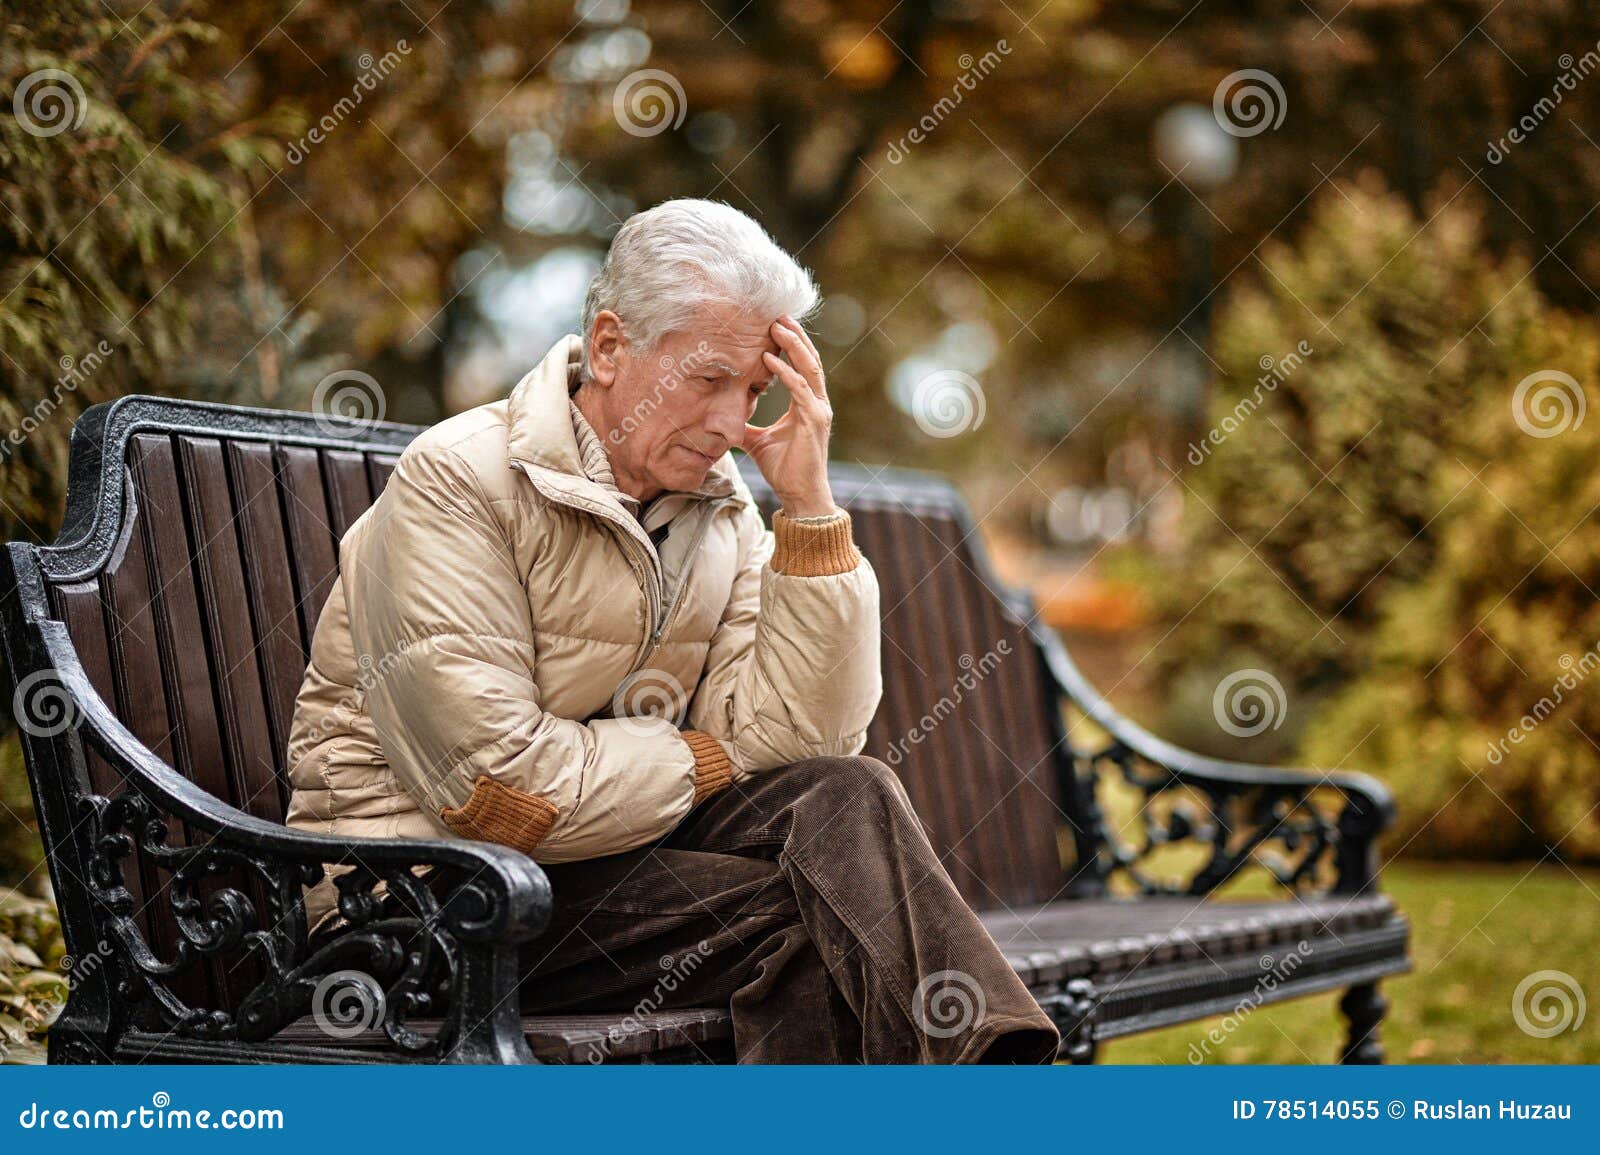 Sad elderly man outdoors stock image. Image of outdoor - 78514055